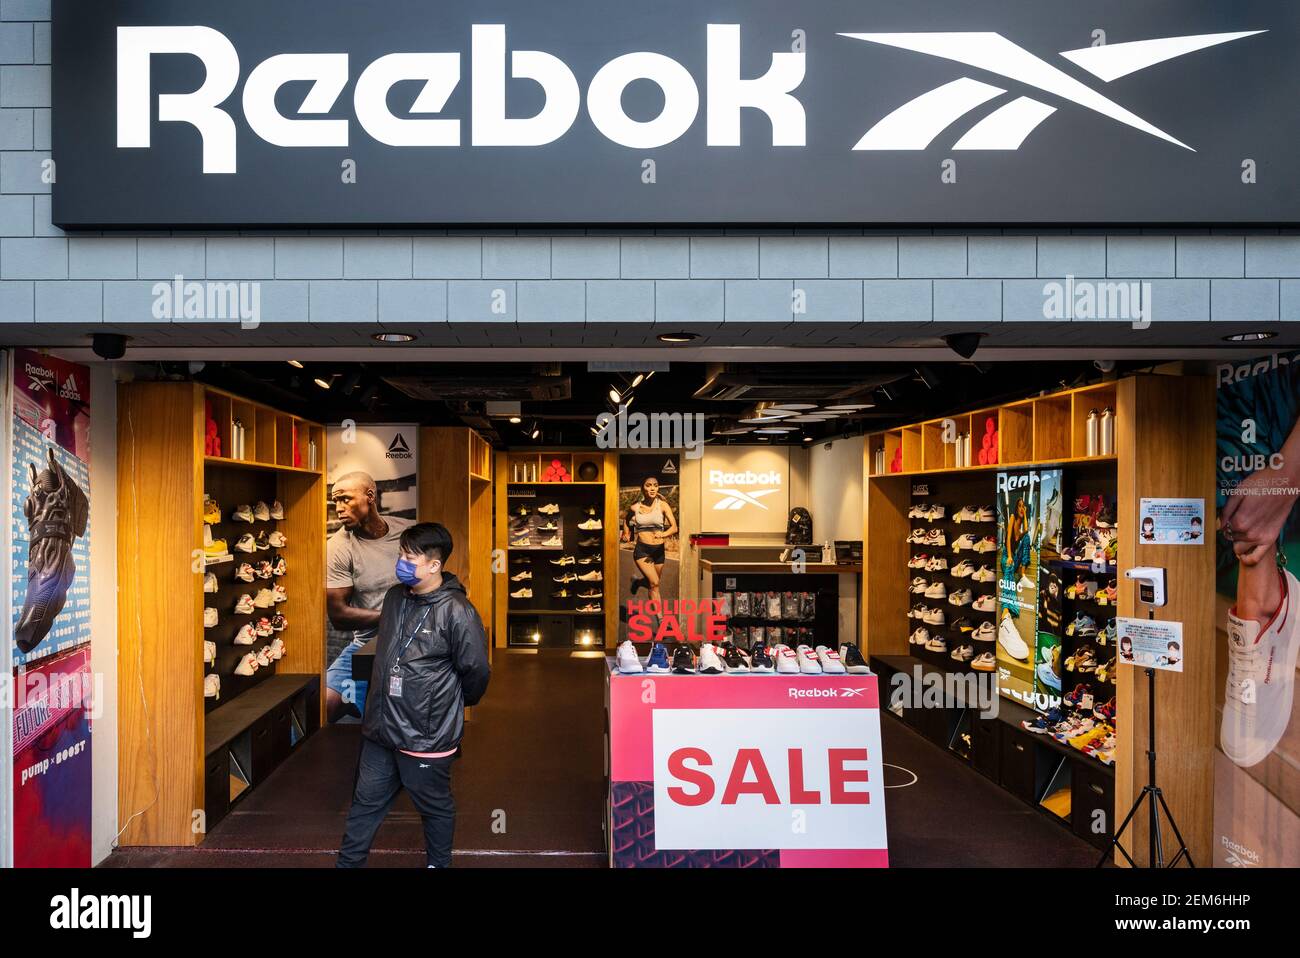 Reebok Store London Discount, SAVE 55%.